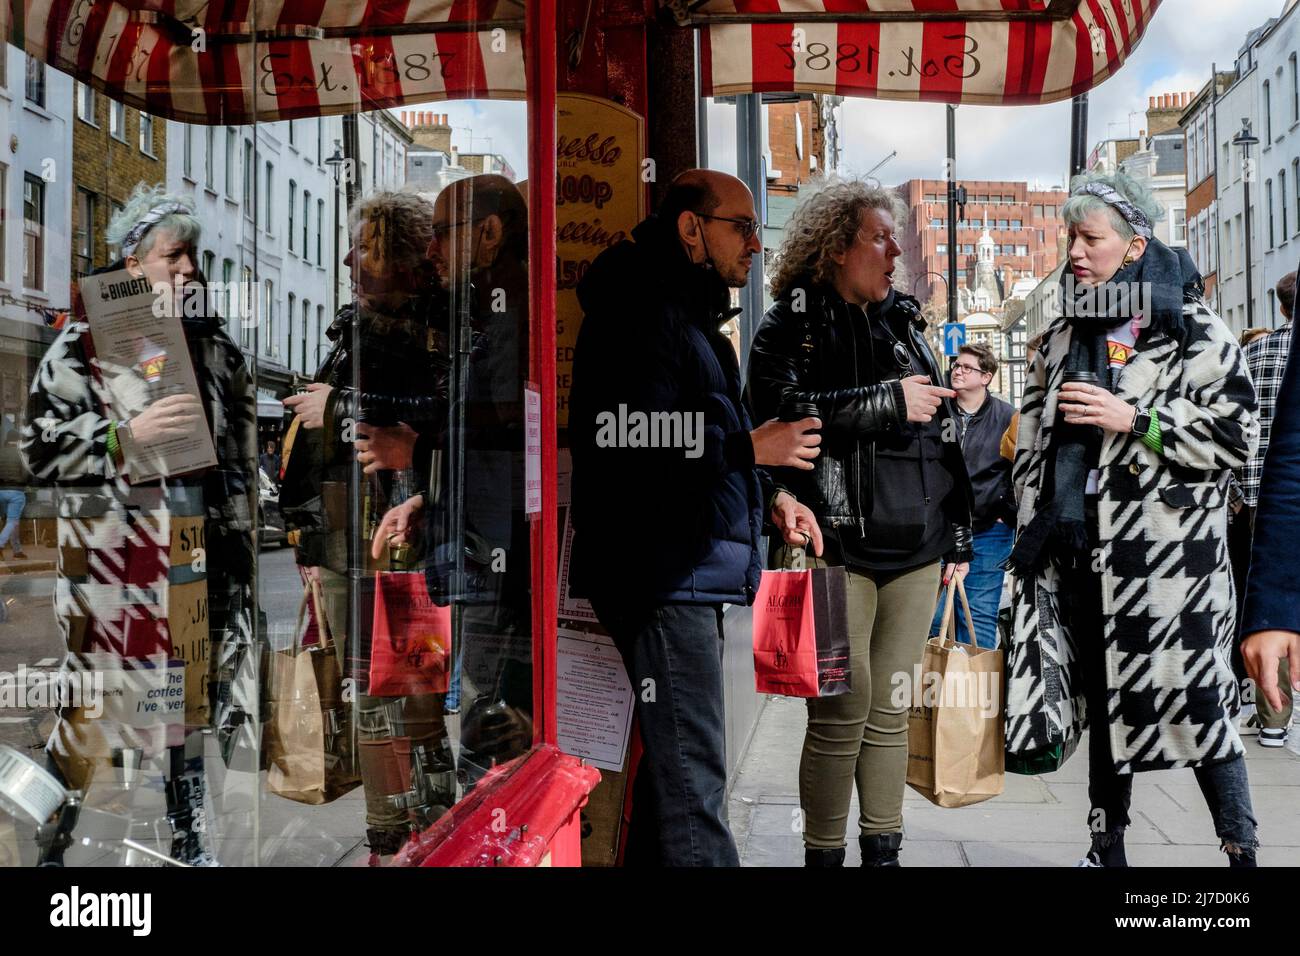 Customers outside the Algerian Coffee Stores premises, Old Compton Street, Soho, London, UK. Stock Photo